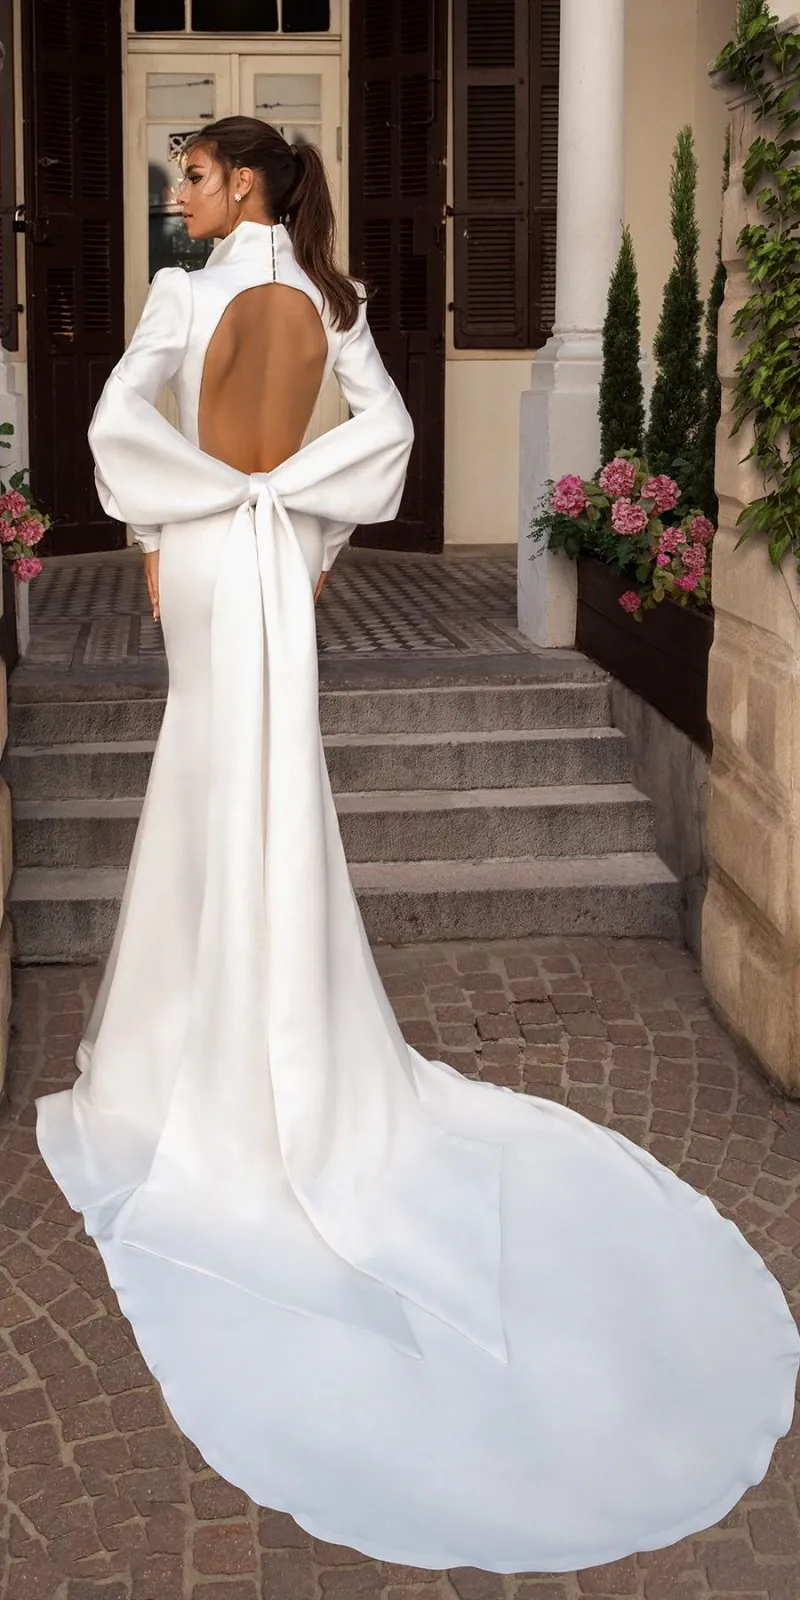 Elihav Sasson 2019 Long Sleeve Prom Dresses V Neck Mermaid Formal Evening Gowns Backless Sweep Train Custom Party Dress7237394